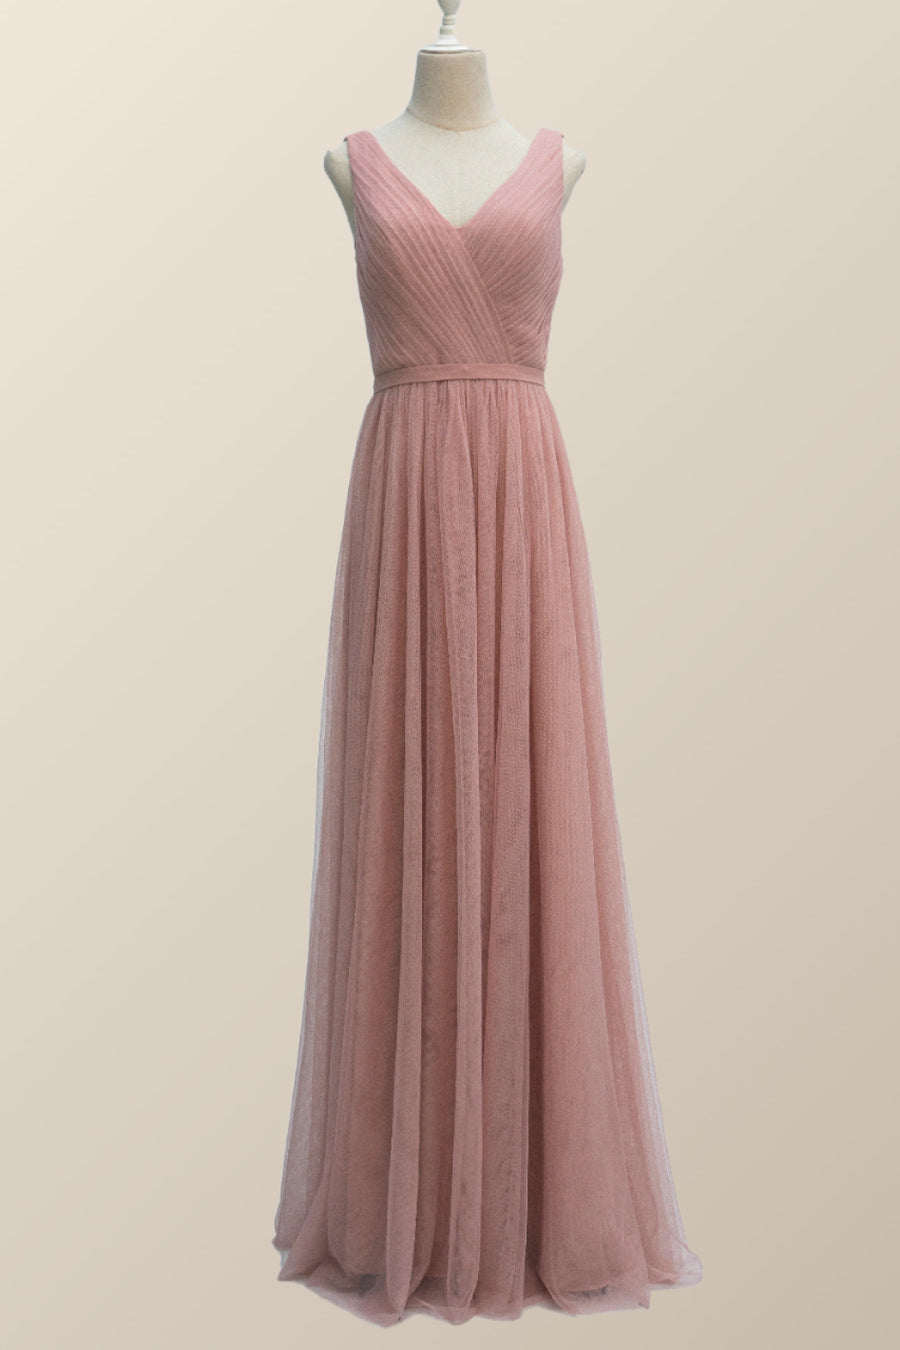 V Neck Plush Pink Tulle Long Bridesmaid Dress